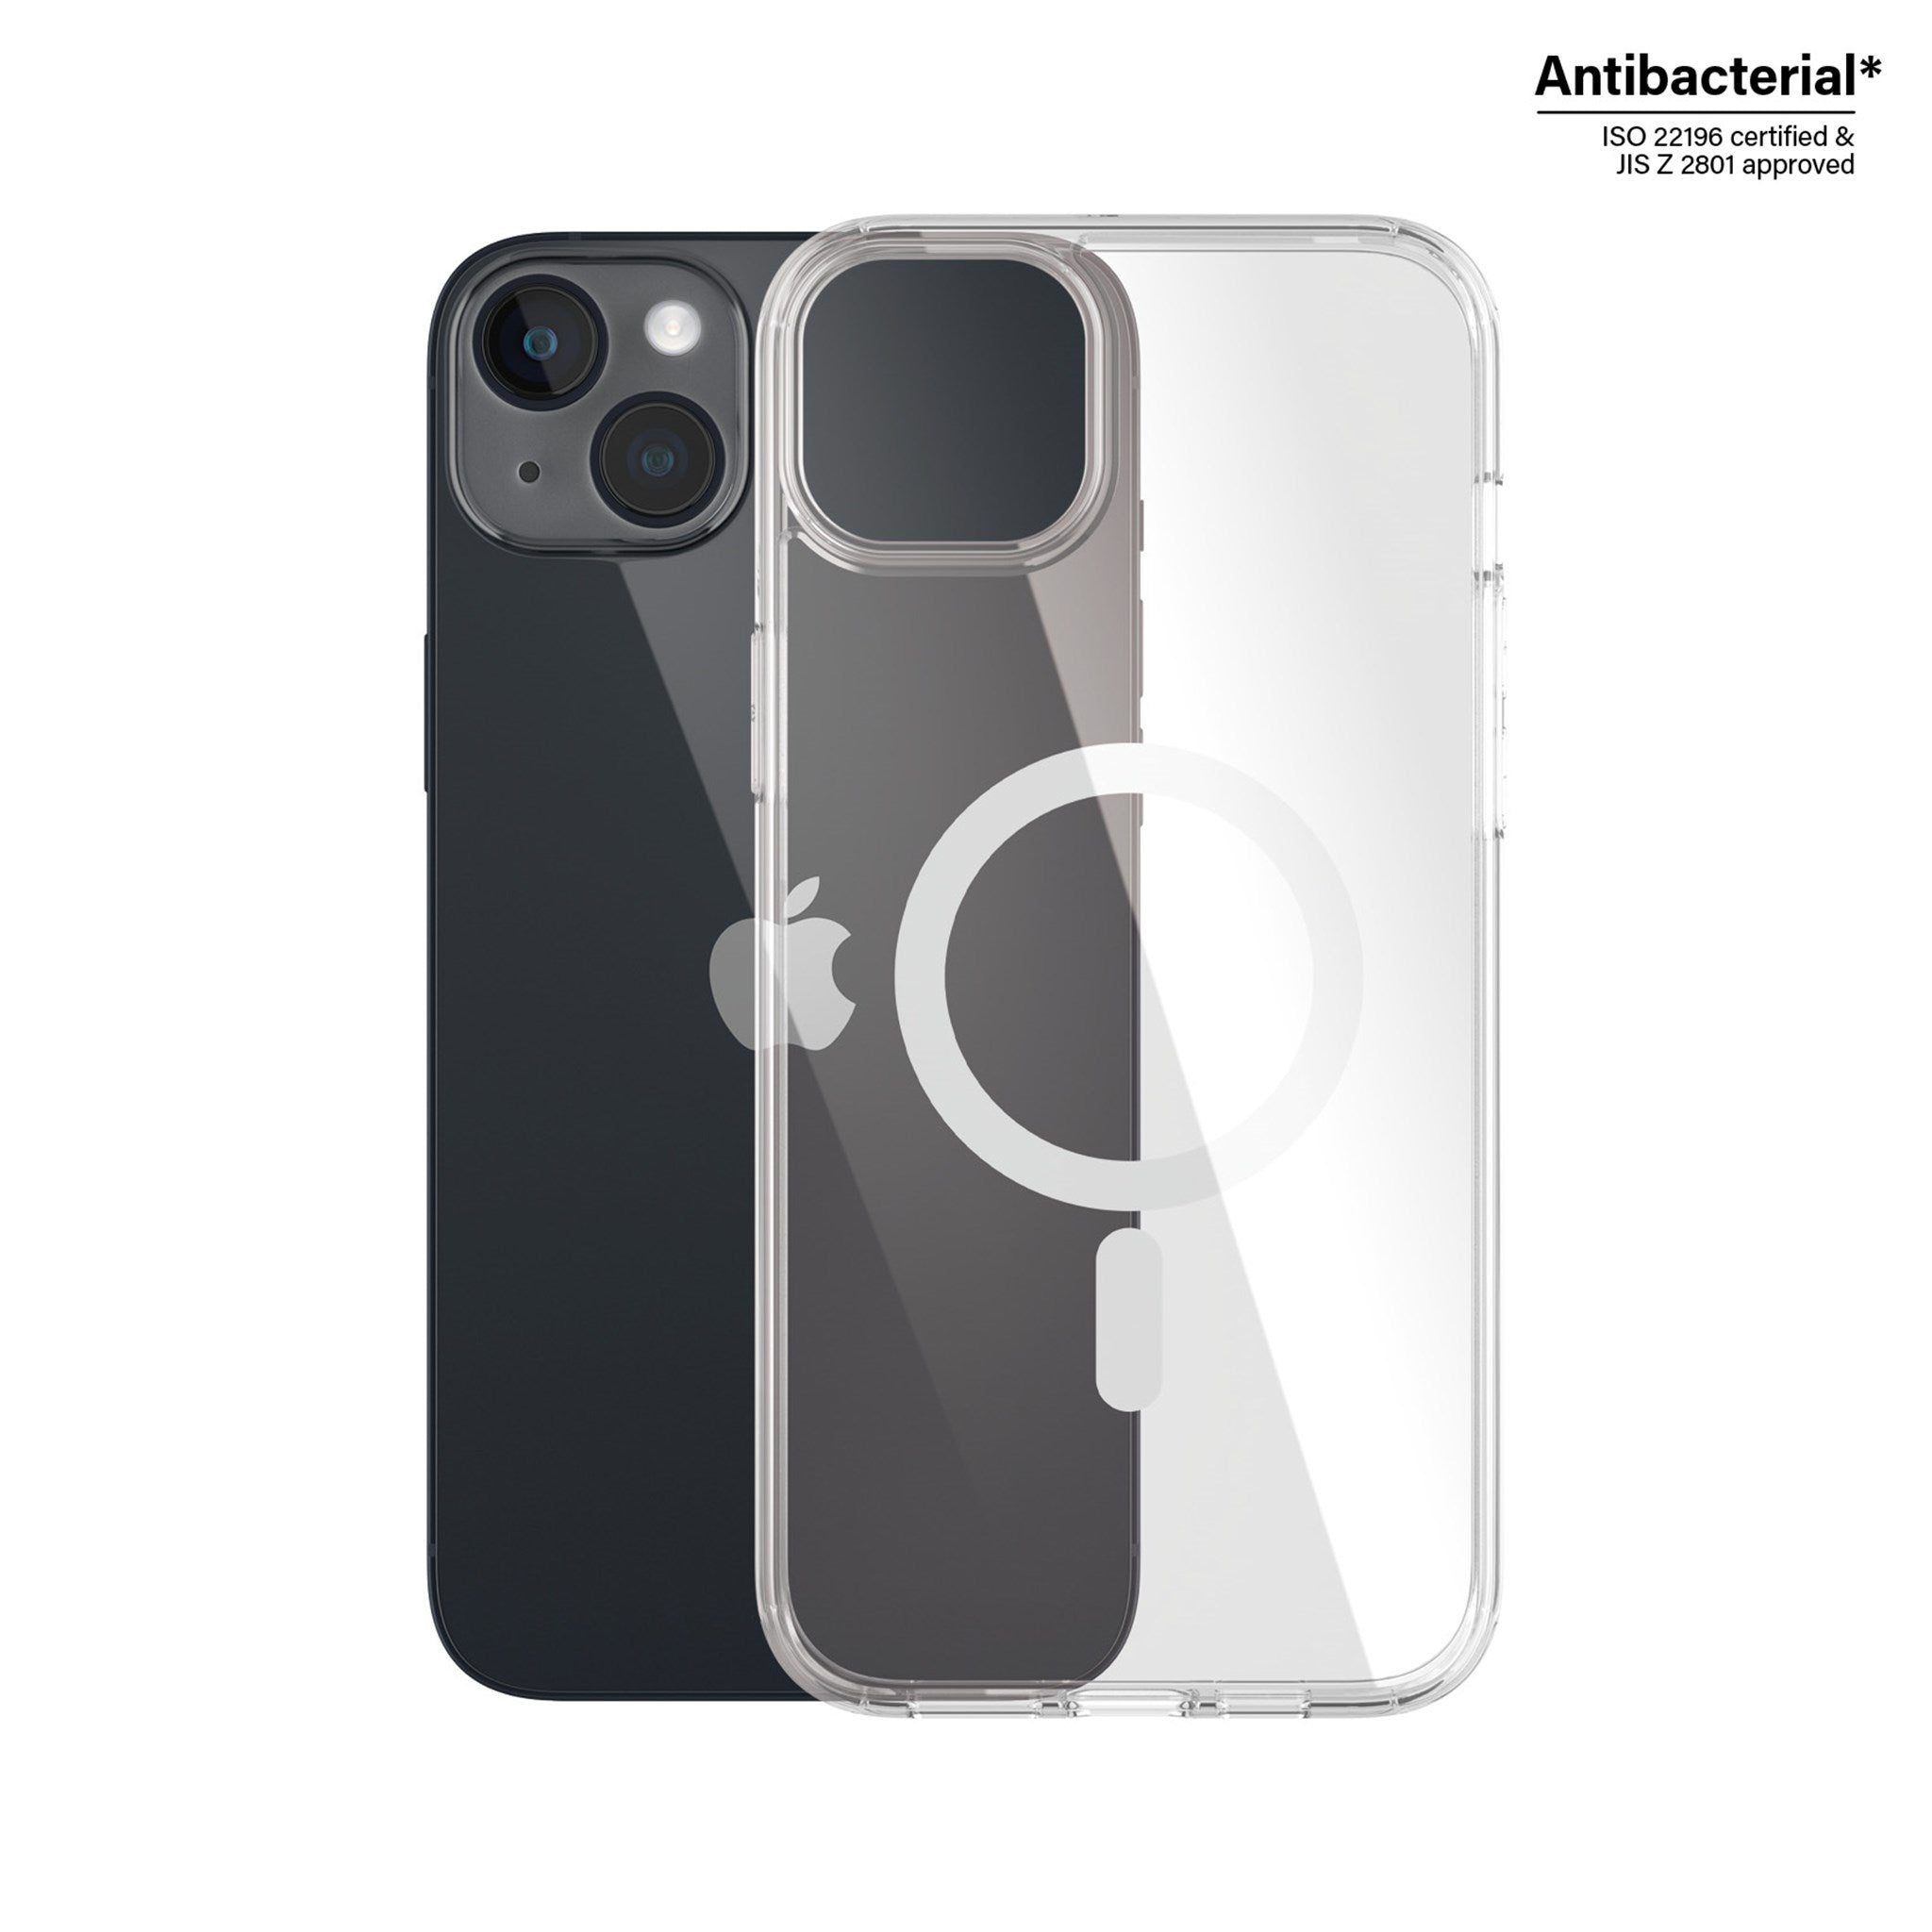 Backcover, Apple, PANZERGLASS 14 iPhone Transparent HardCase MagSafe, Plus,